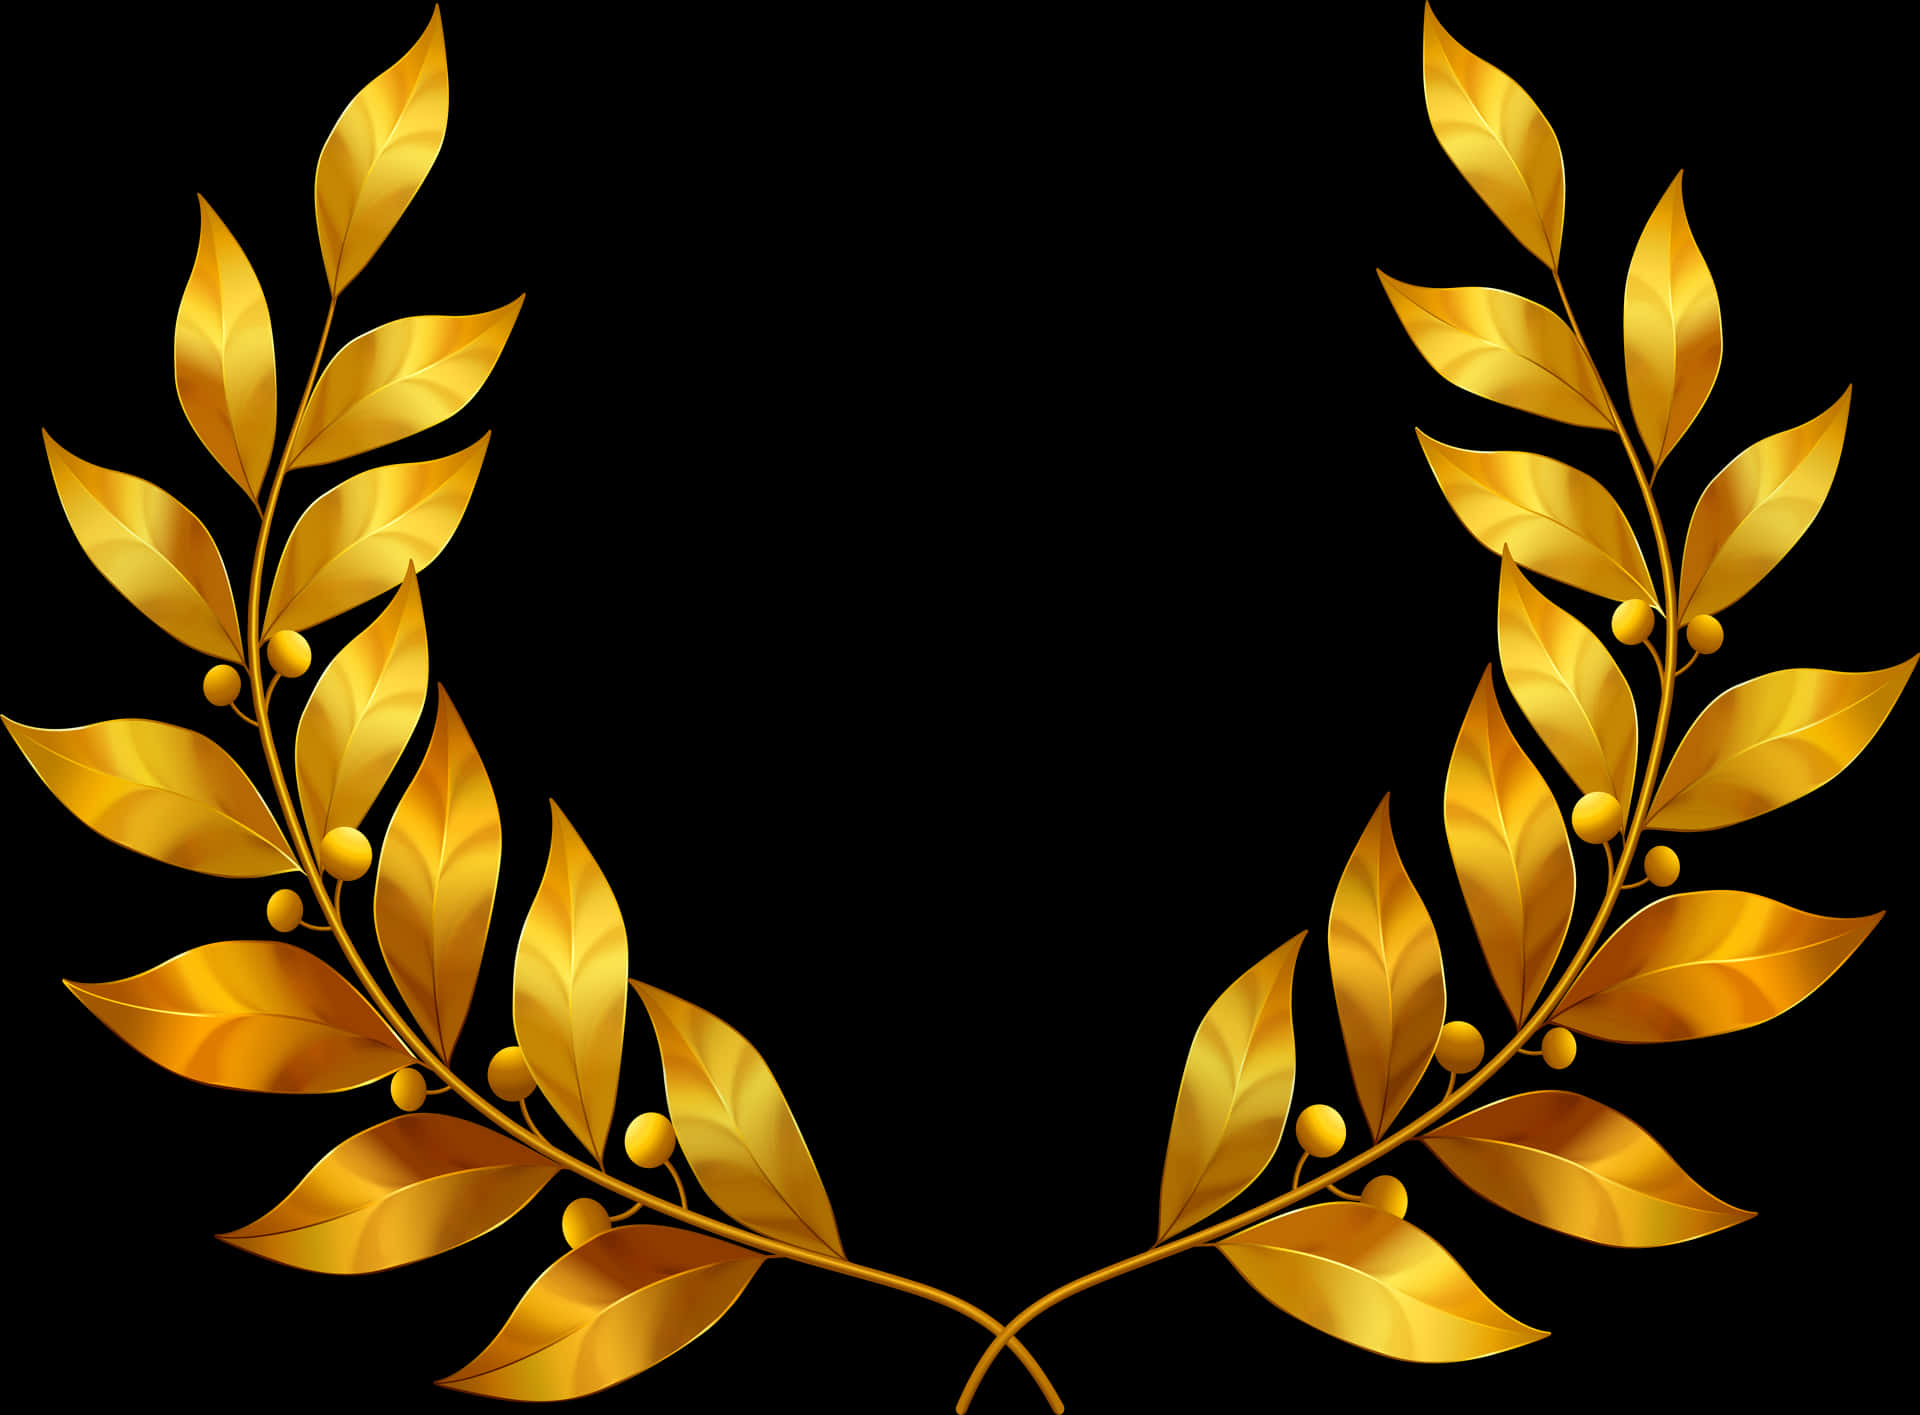 Golden Laurel Wreath Design PNG image